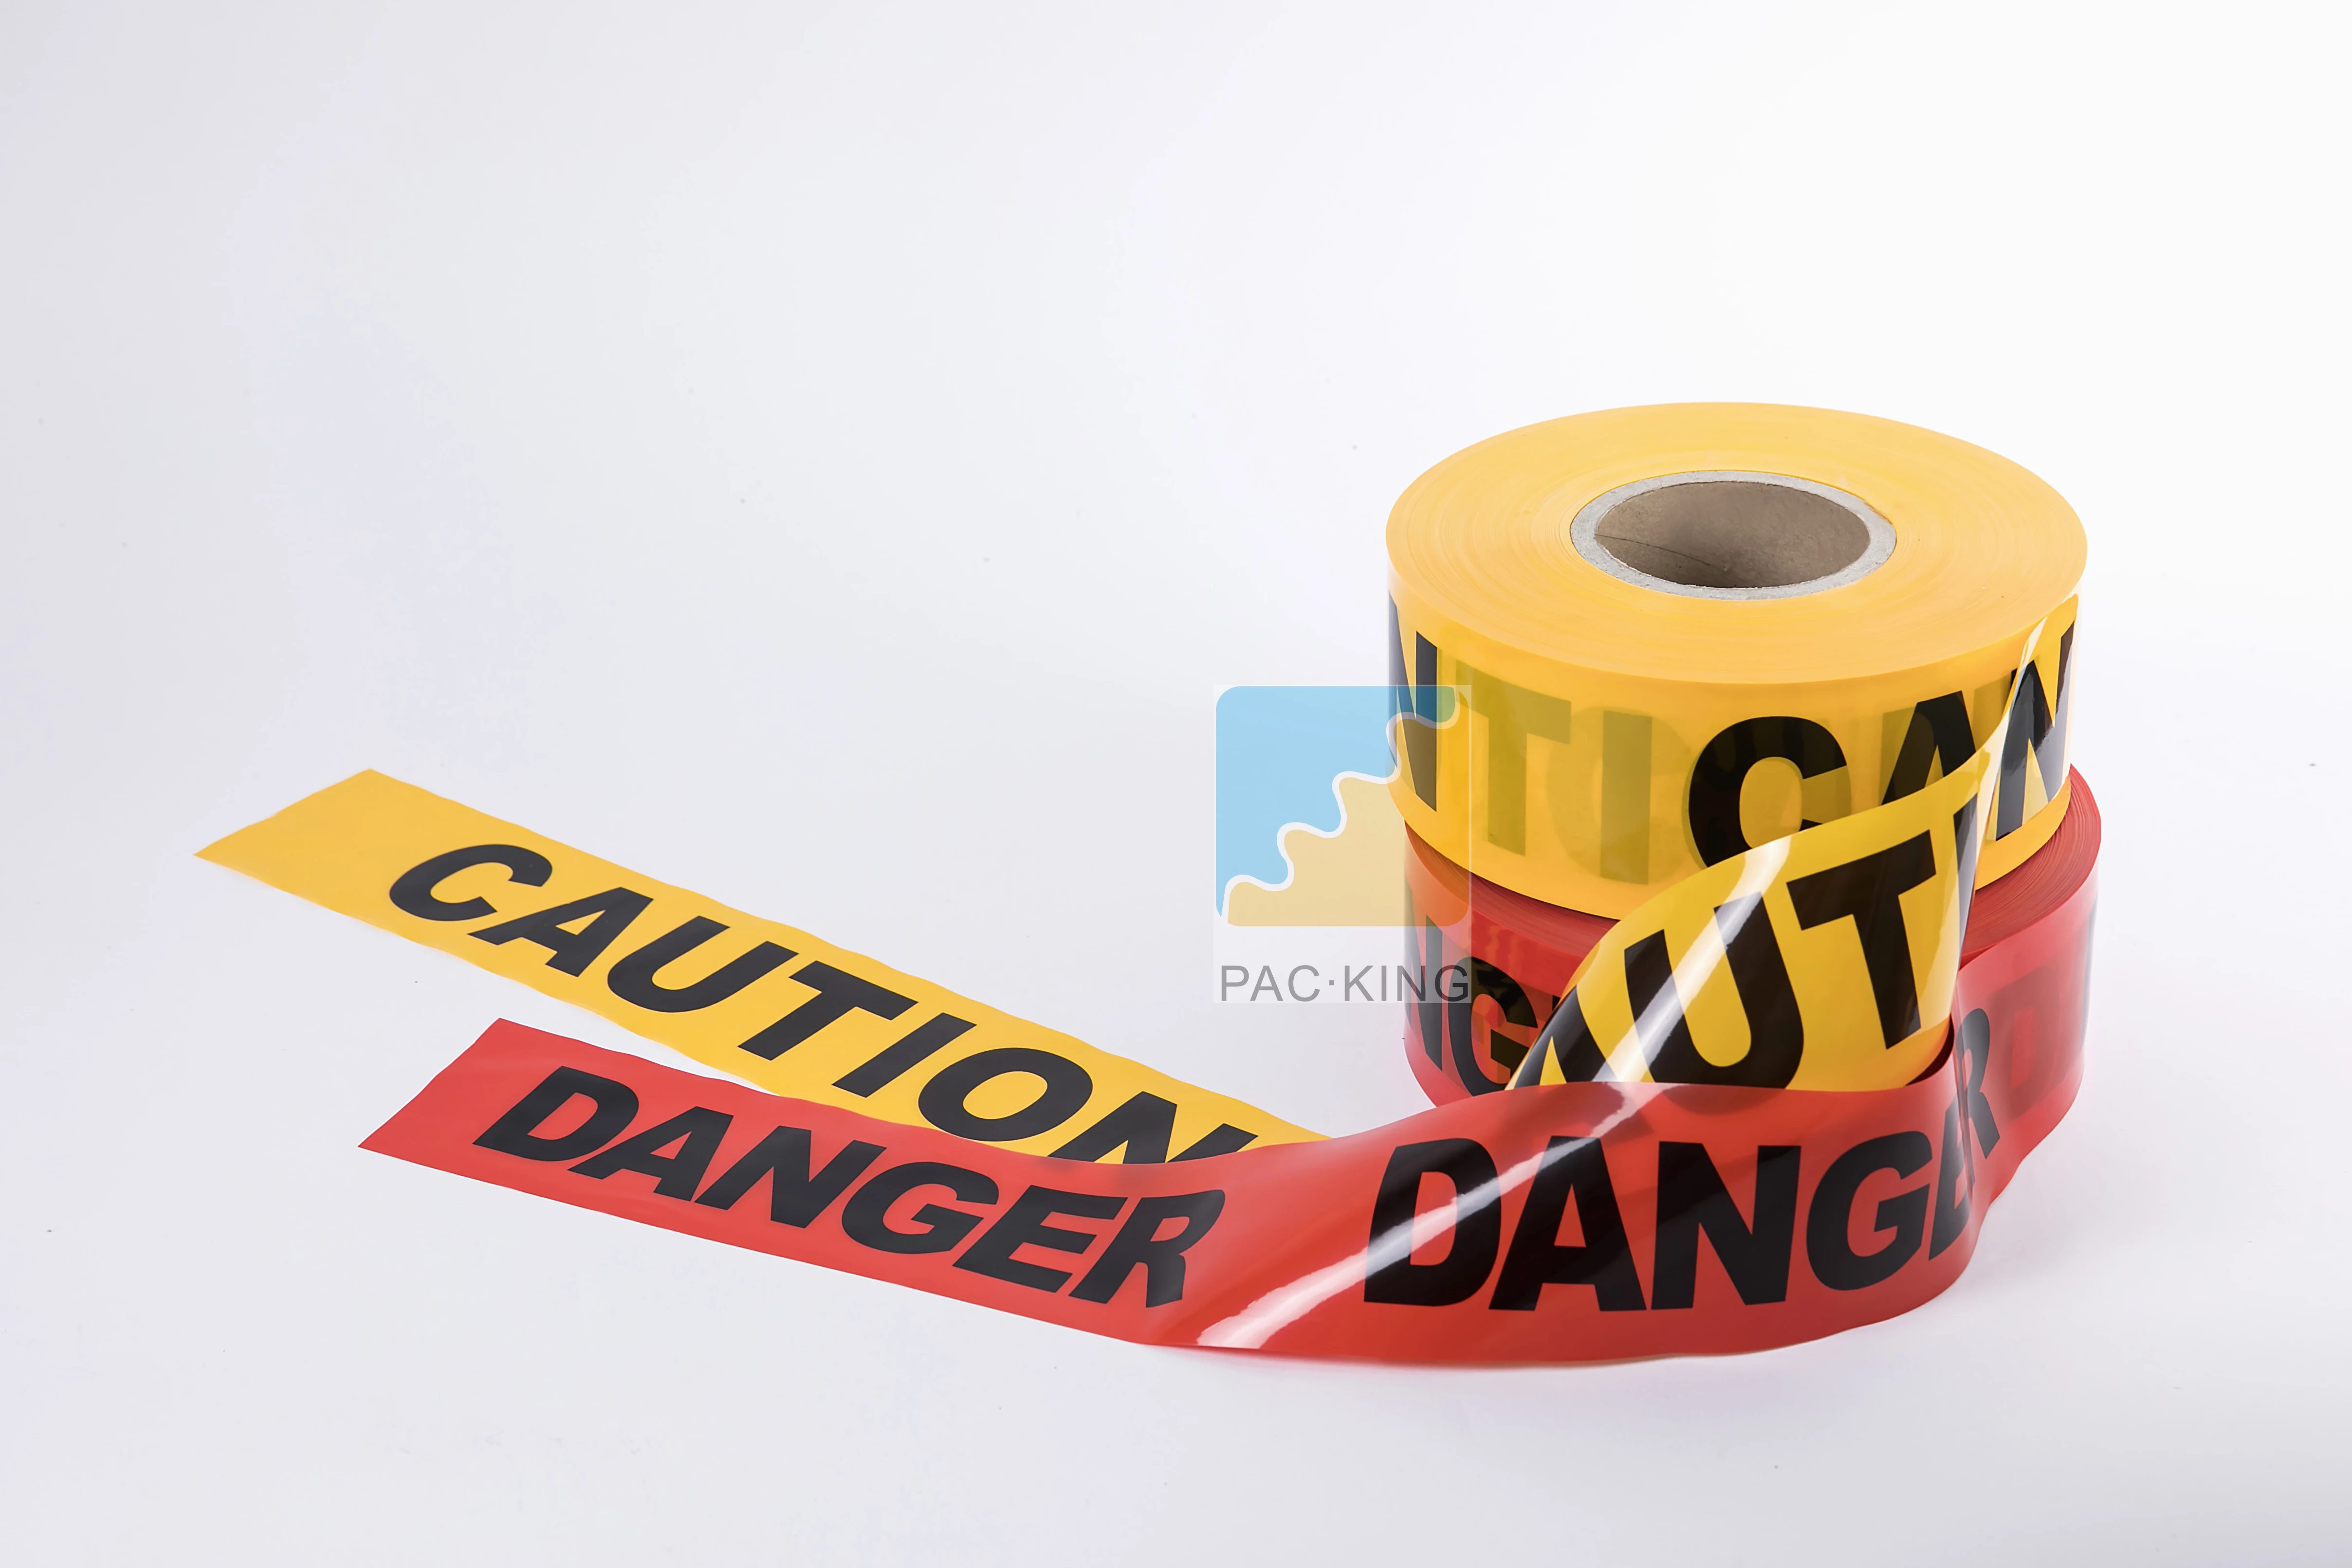 
Police Danger Barricade PE Plastic Walkway Marking Warning Caution Tape 